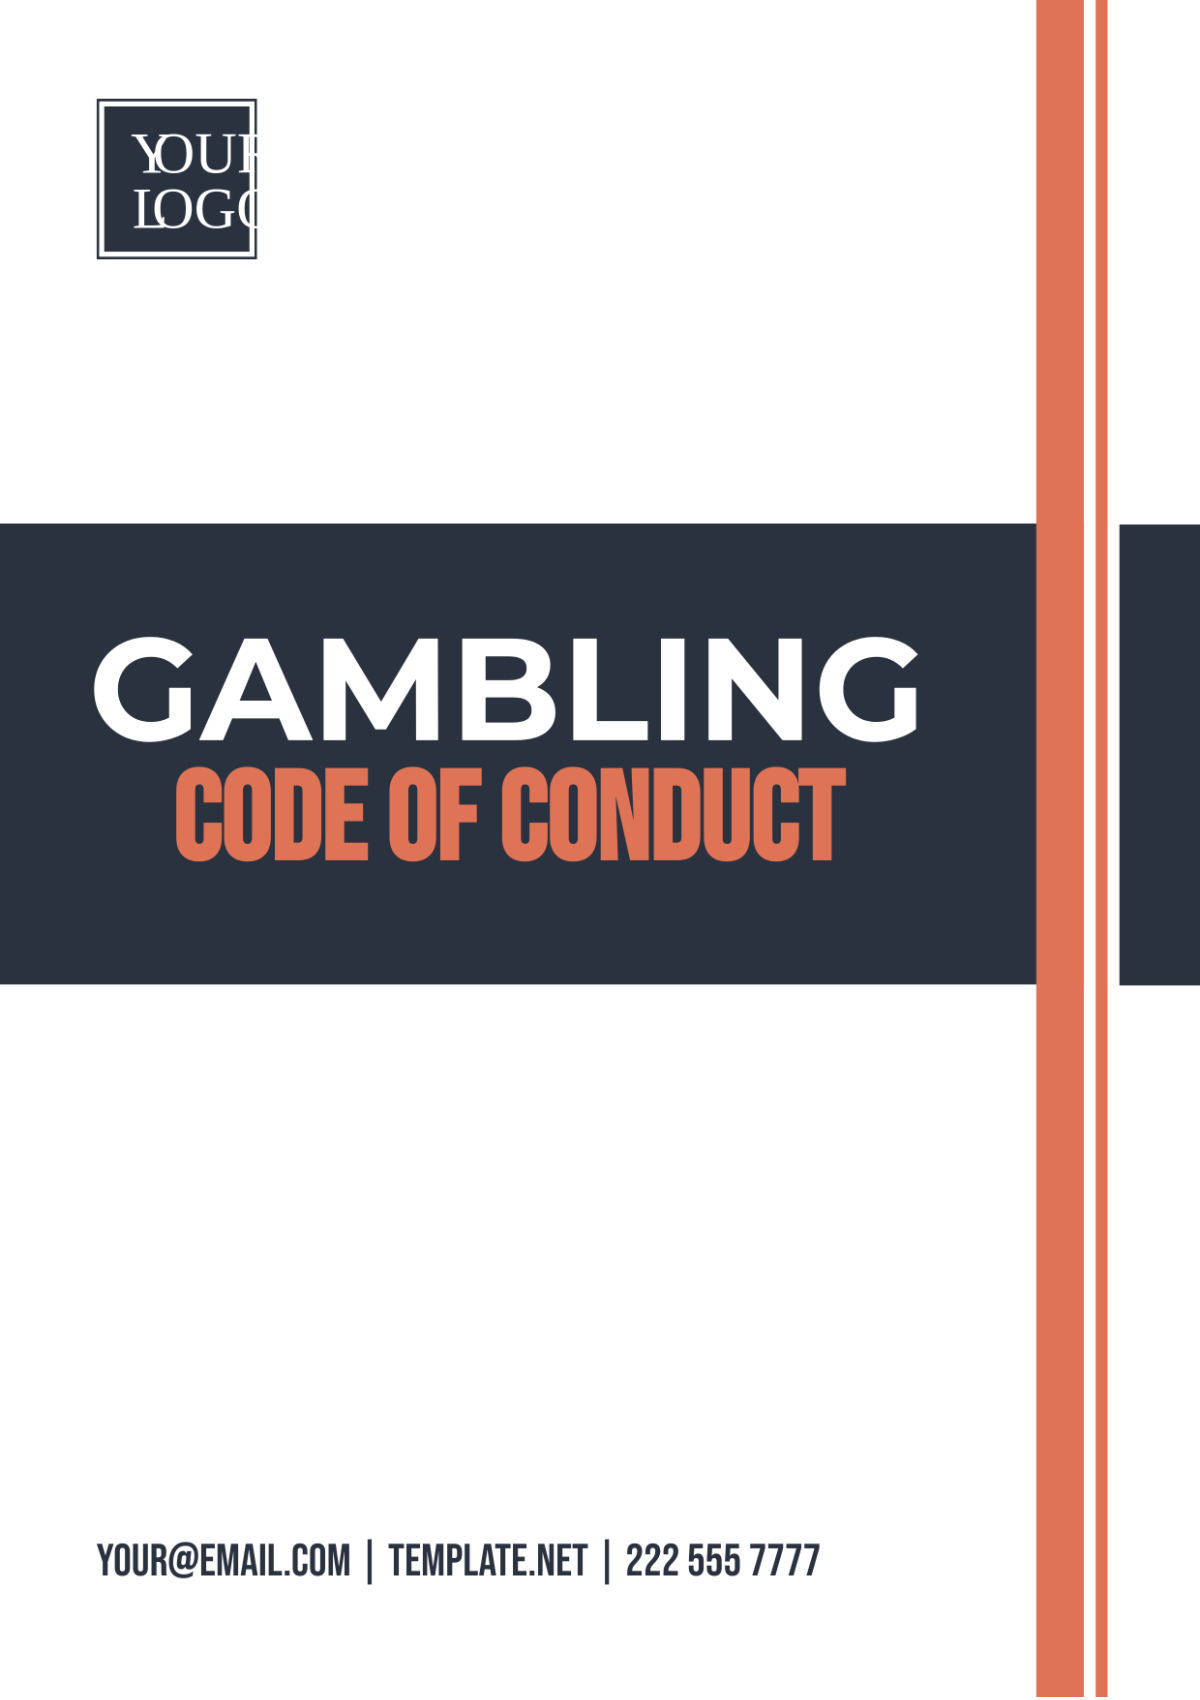 Gambling Code of Conduct Template